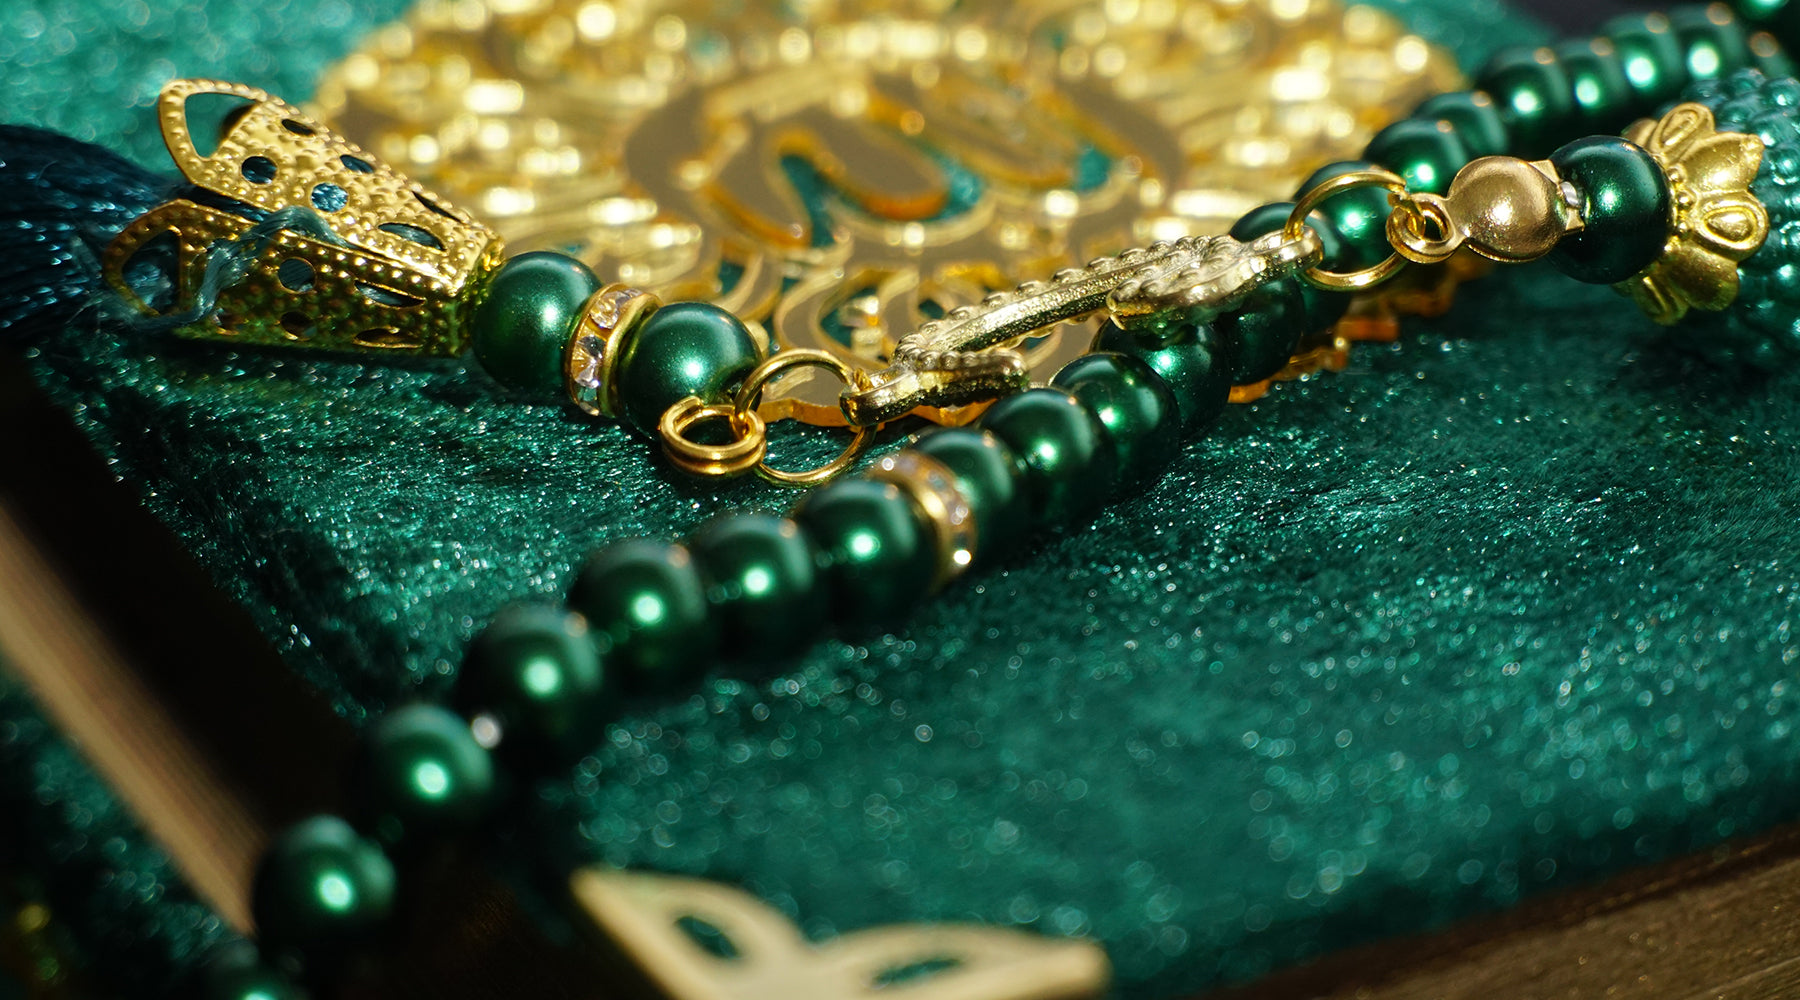 How To Use Islamic Prayer Beads?